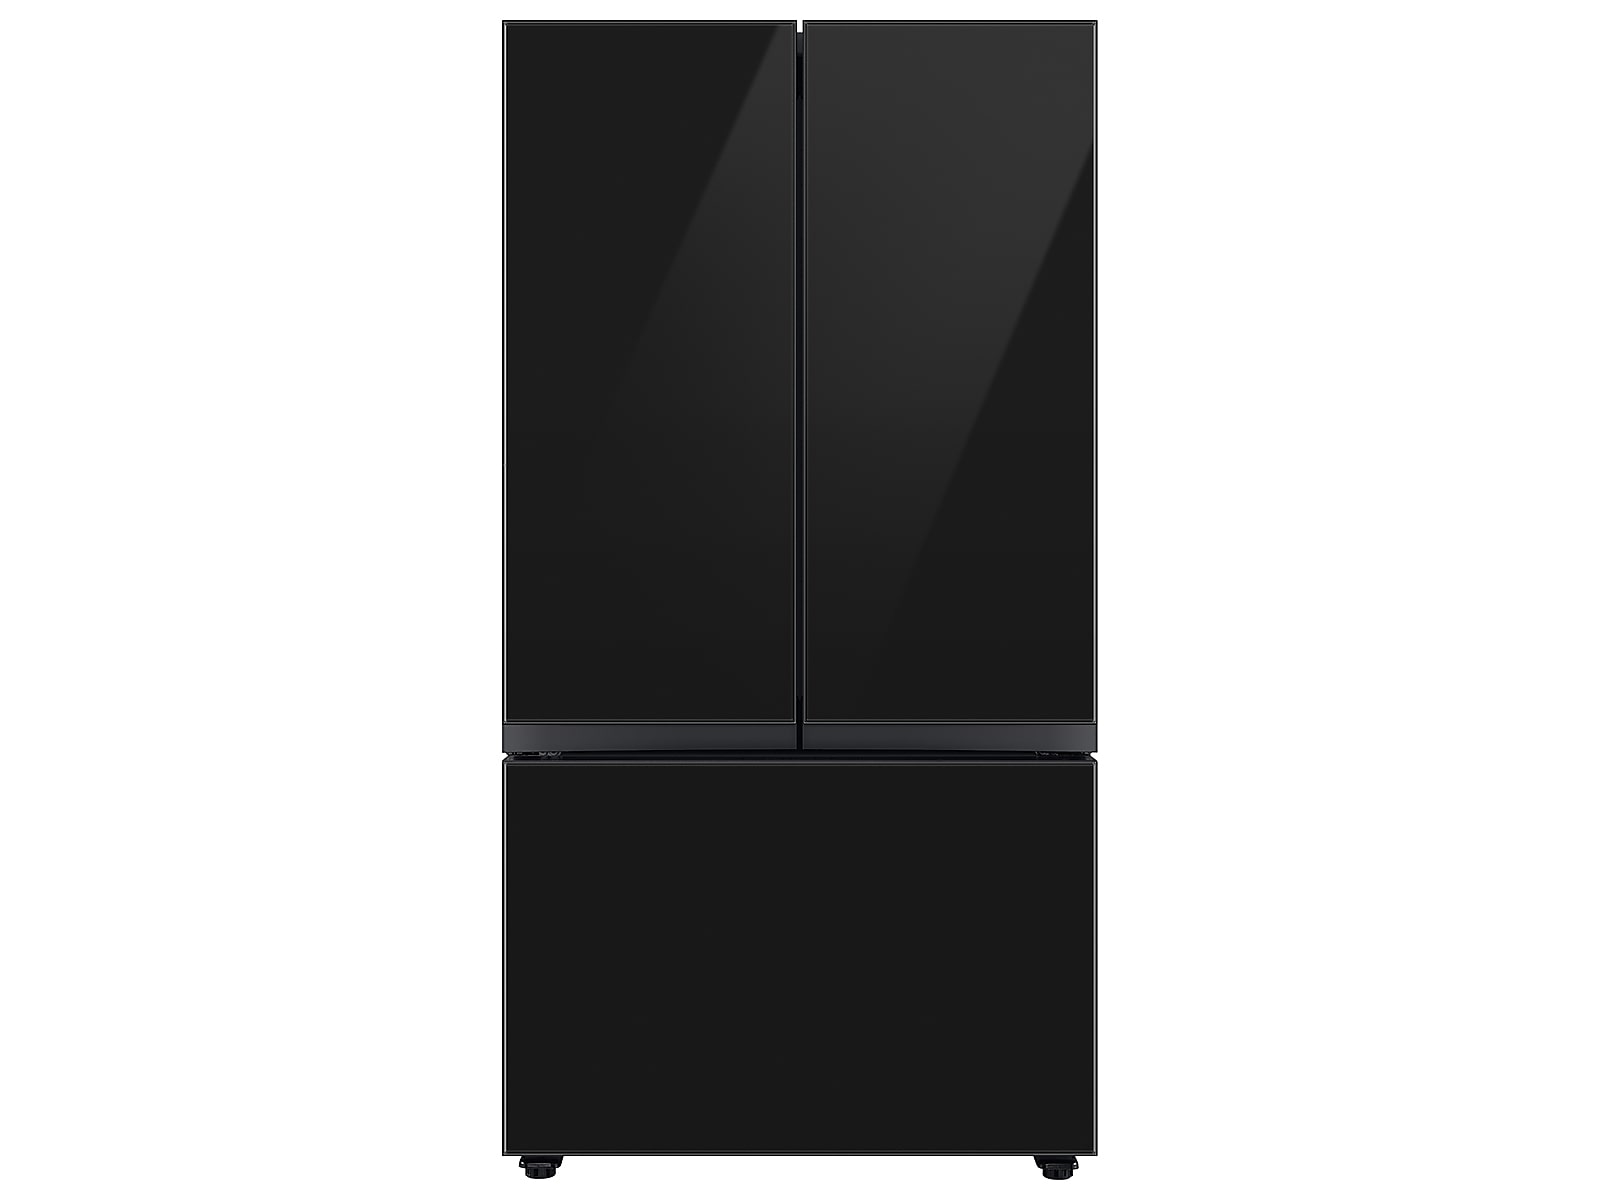 Samsung Bespoke 3-Door French Door Refrigerator in Stainless Steel (30 cu. ft.) with Beverage Center™ in Charcoal Glass(BNDL-1650309670294)